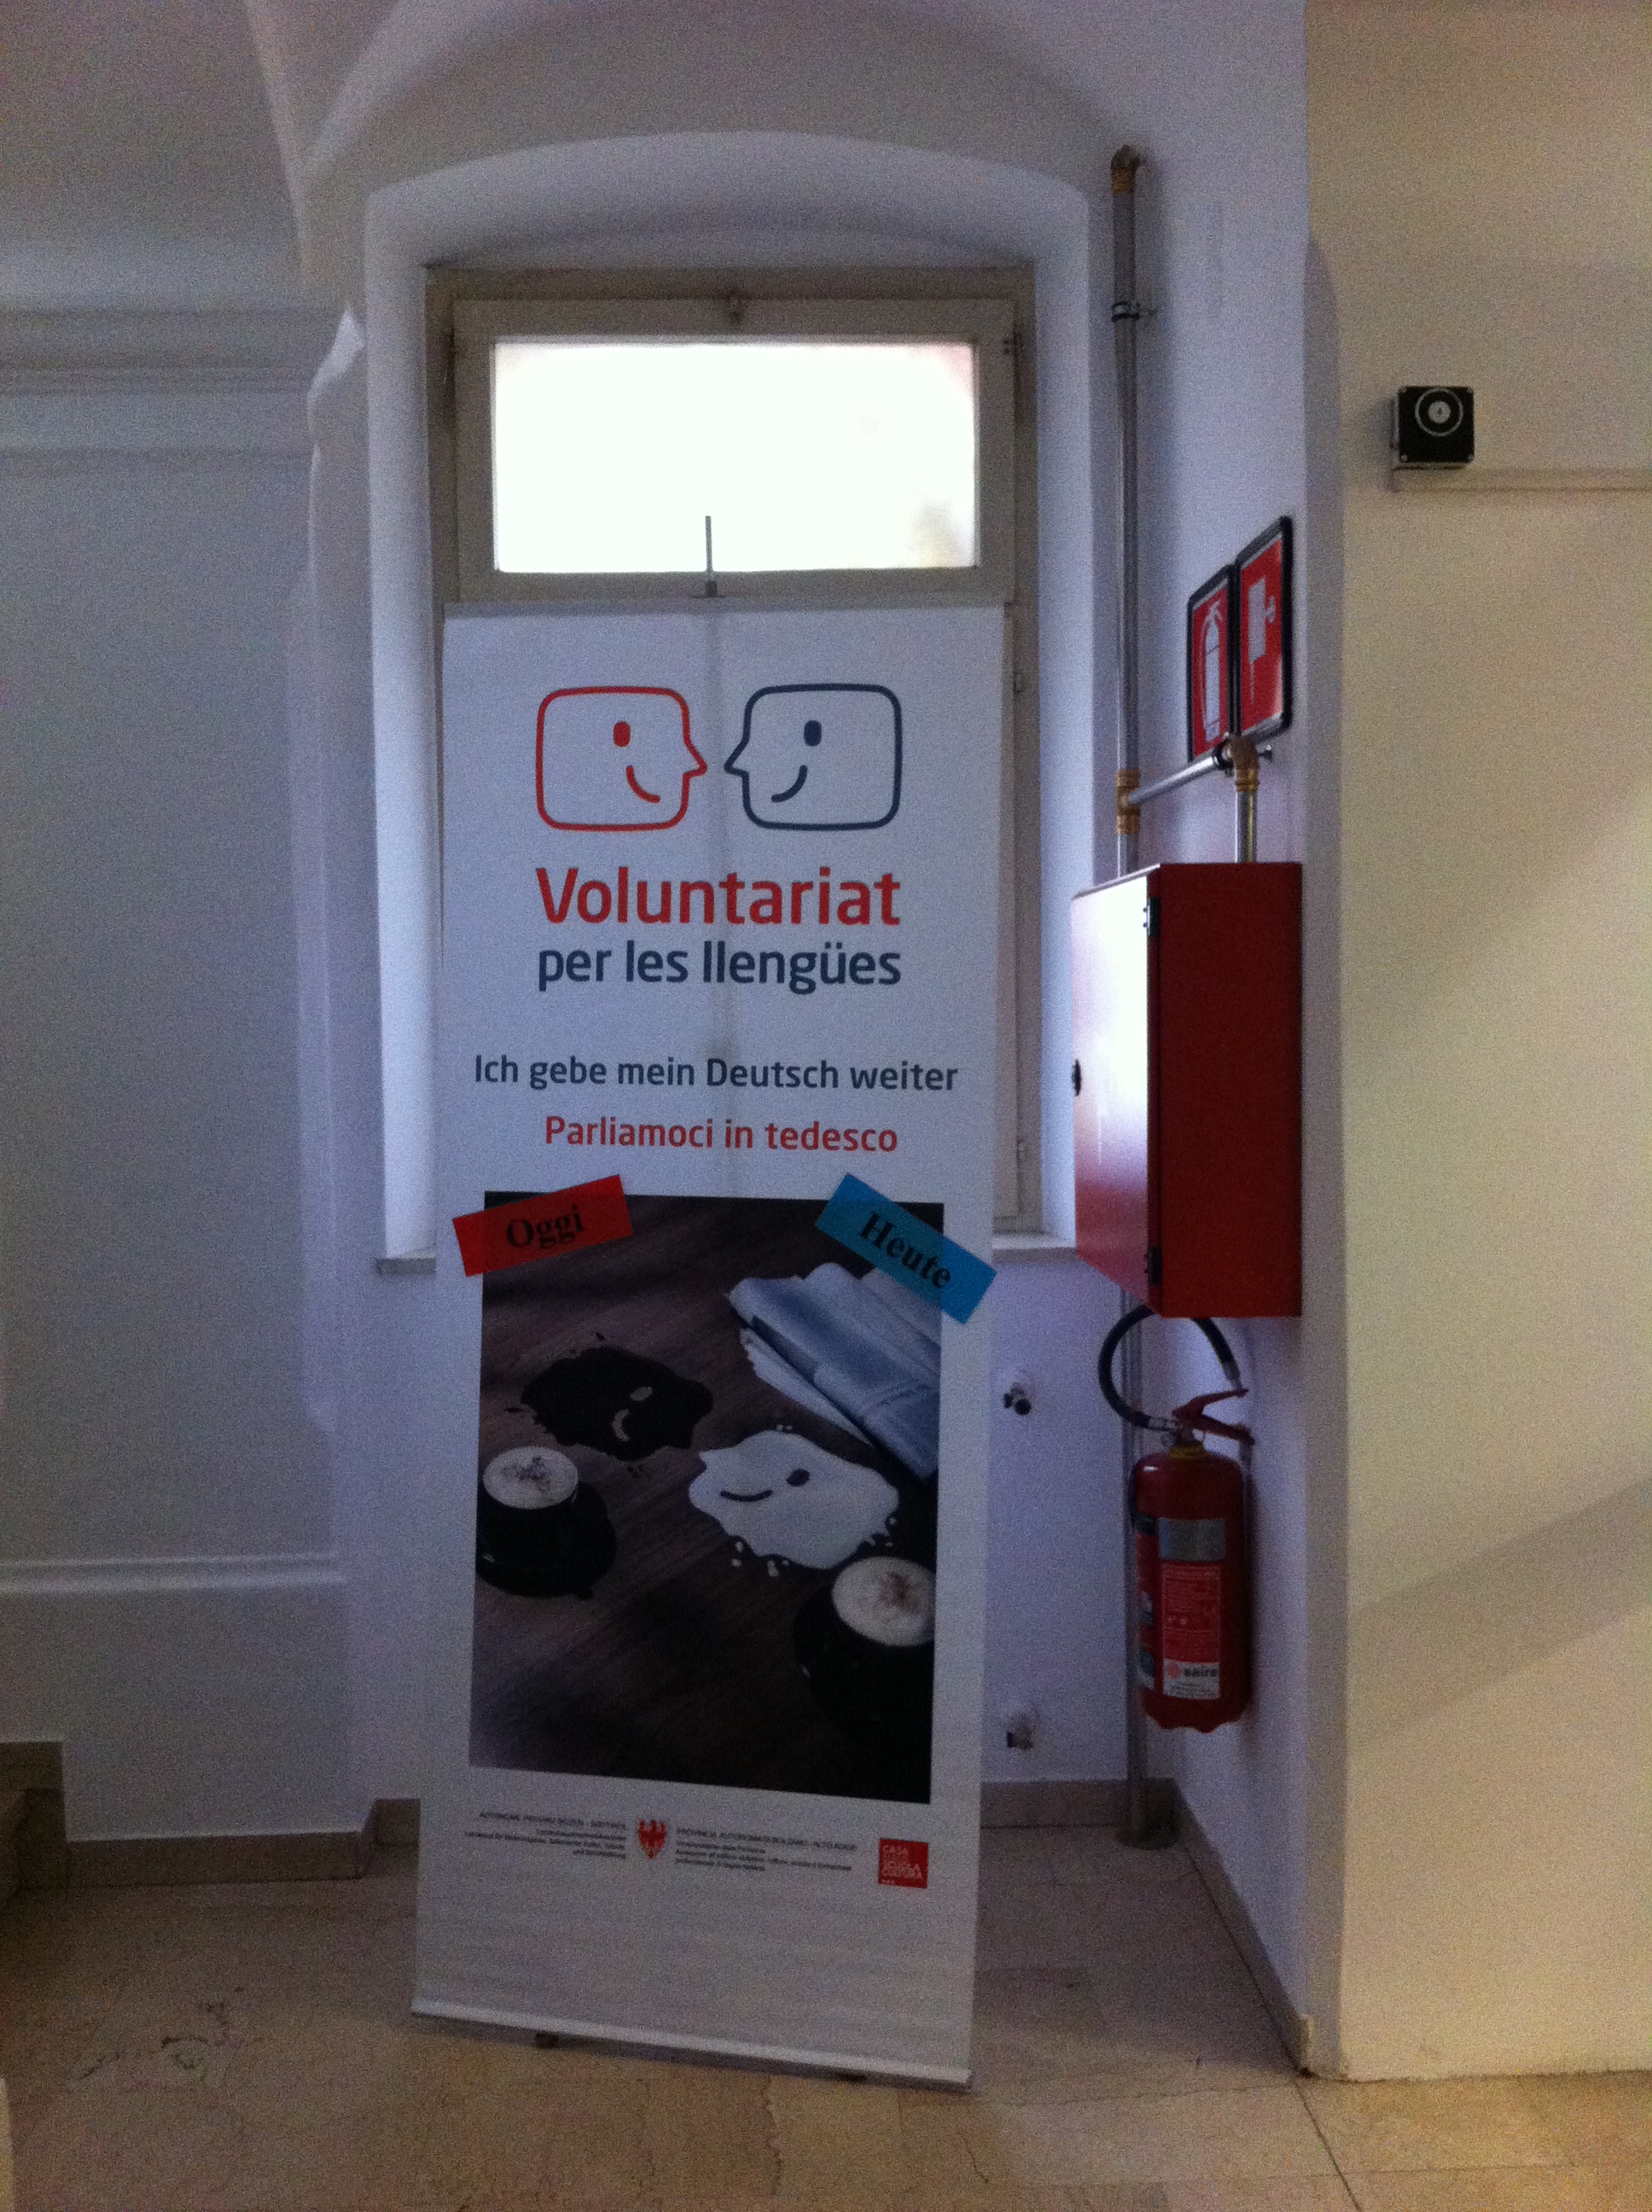 Voluntariat per les llengües in der Bibliothek 26.05.2012